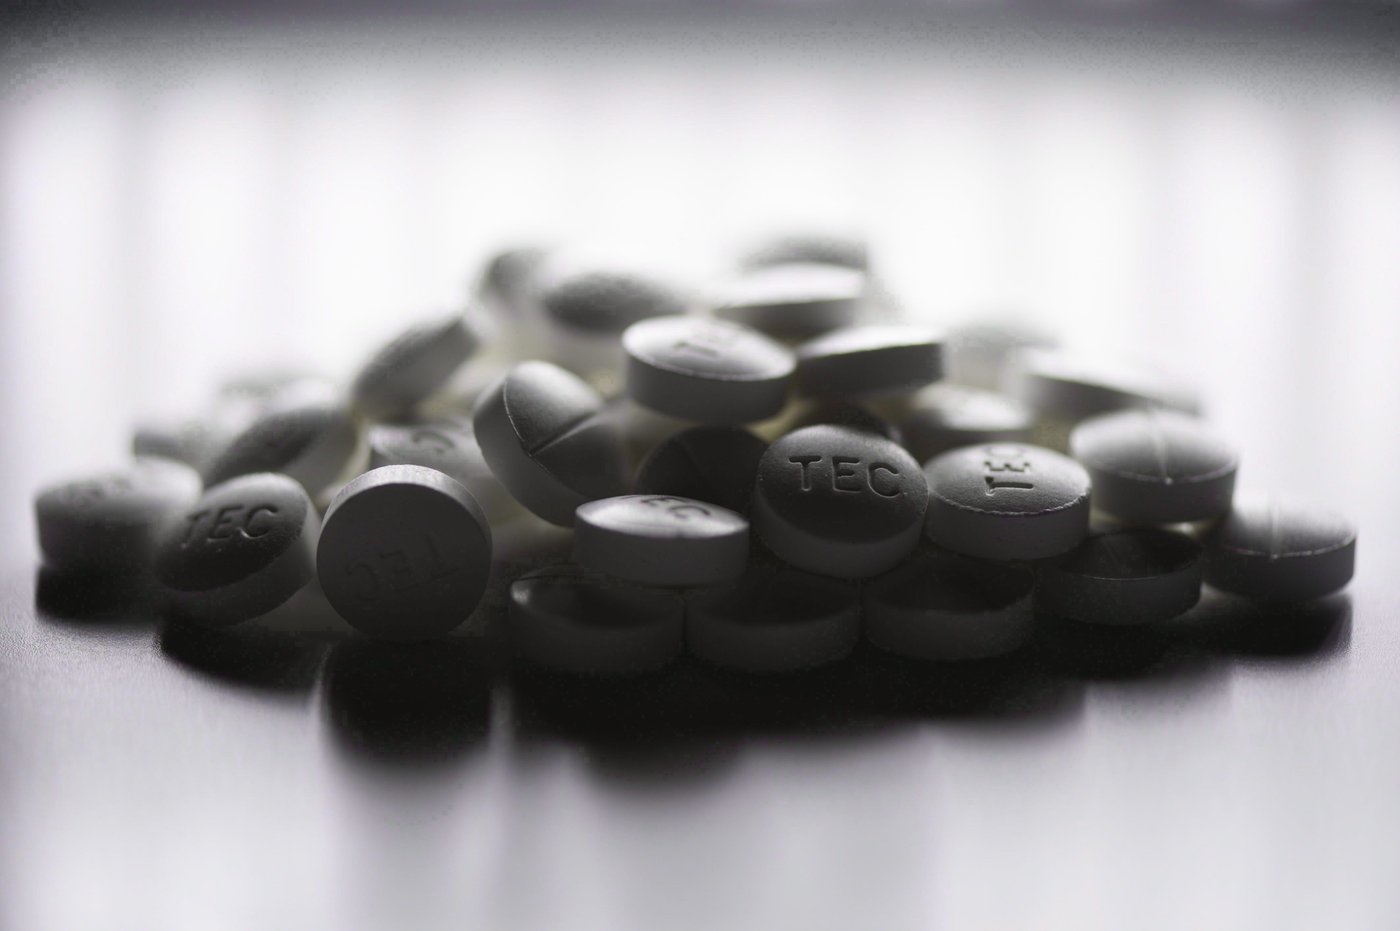 Des opioïdes semblent être prescrits inutilement au Canada